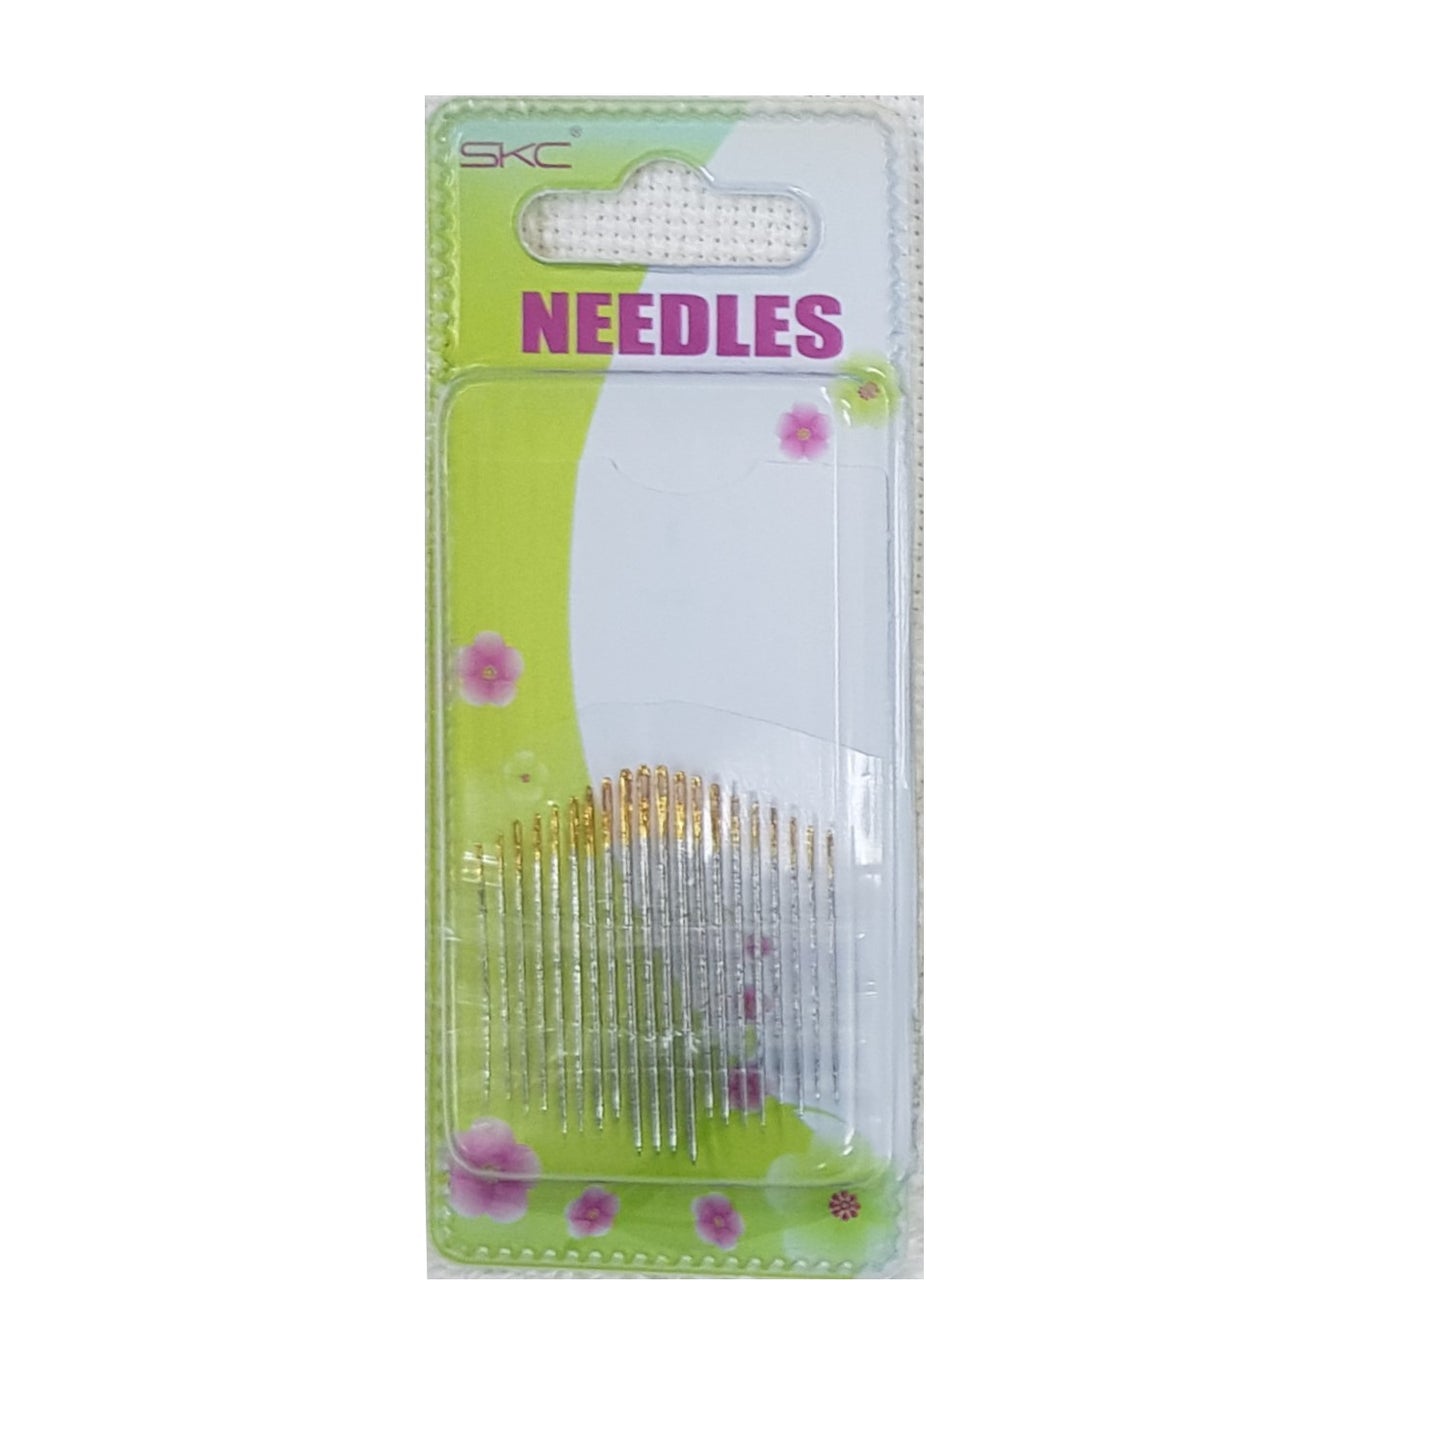 20 pcs Sewing Needles Small Size (120033)